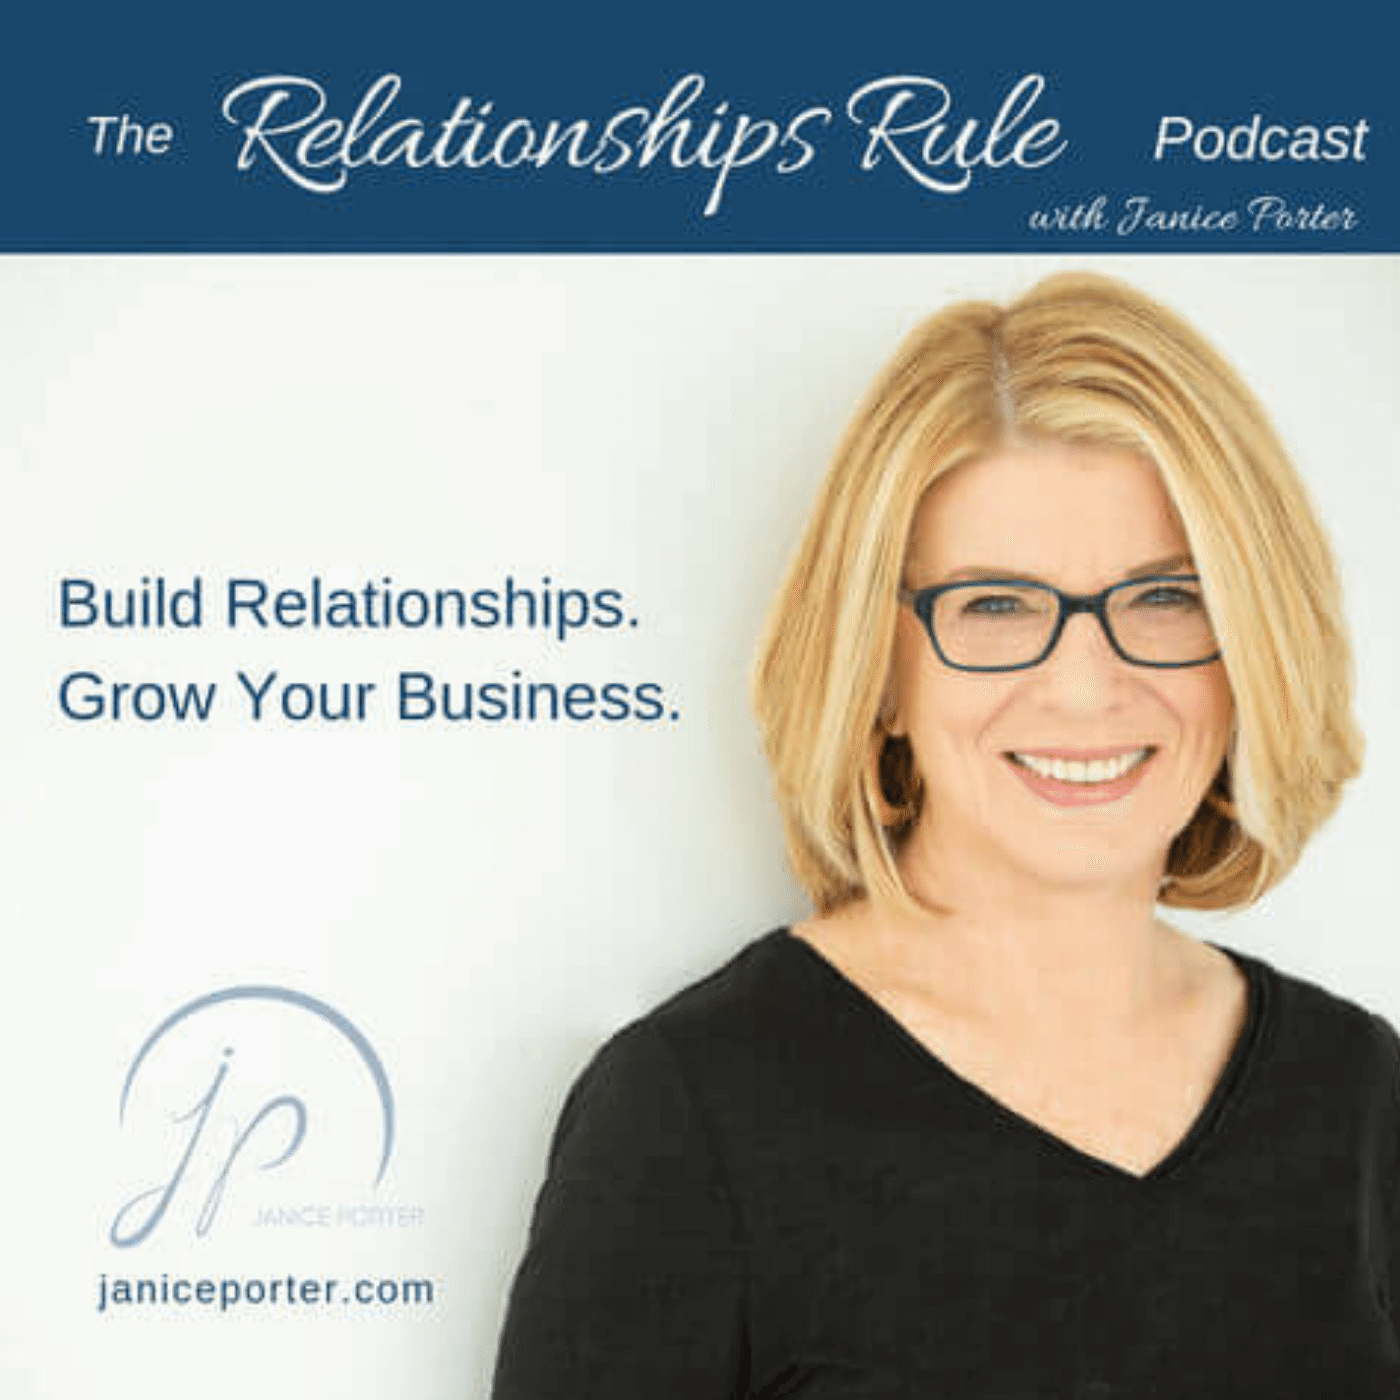 Artwork for podcast Relationships Rule